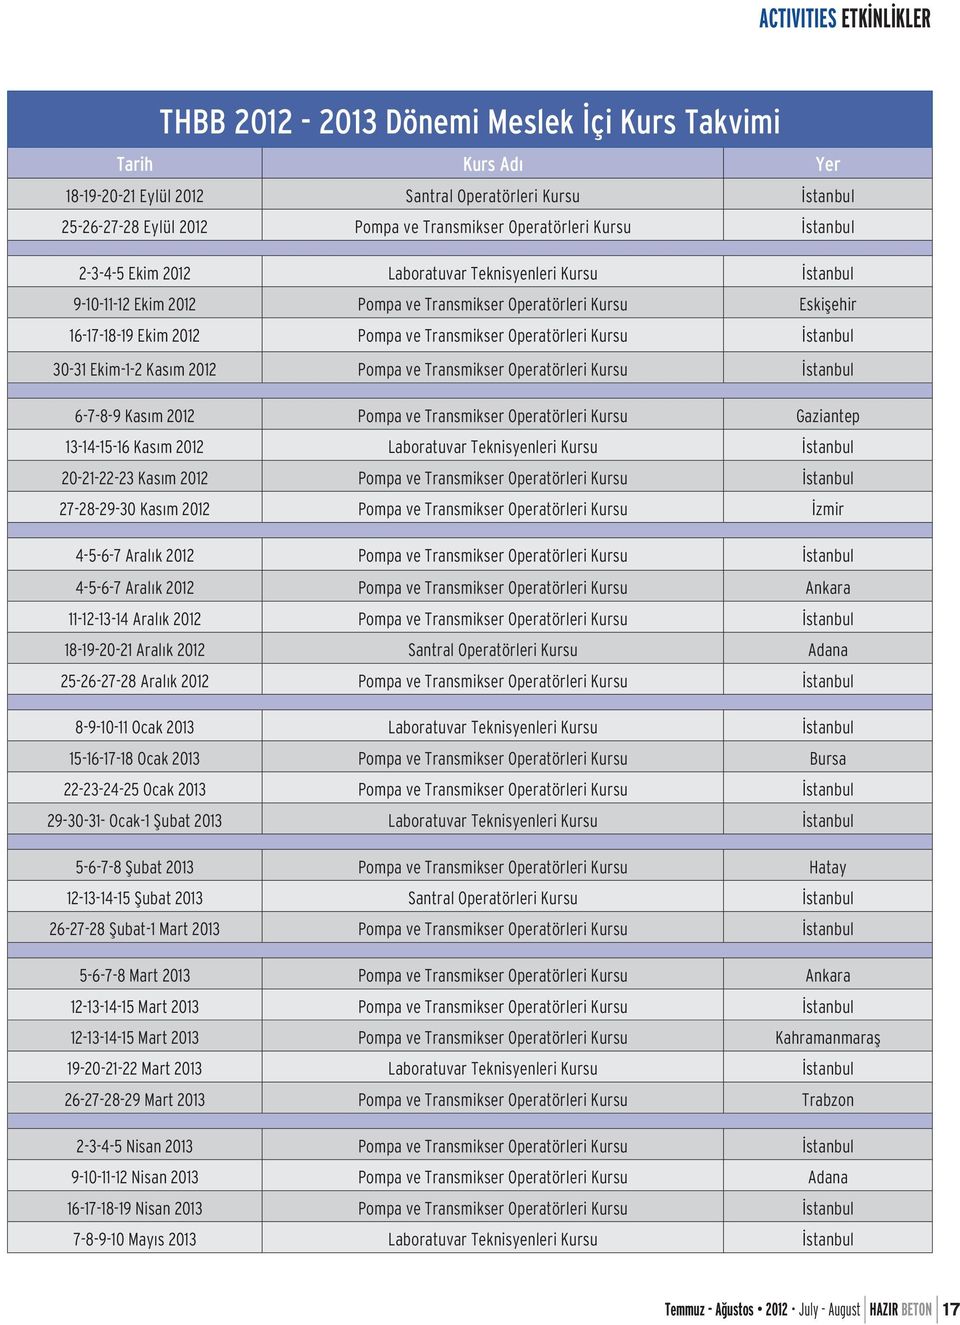 Transmikser Operatörleri Kursu İstanbul 30-31 Ekim-1-2 Kasım 2012 Pompa ve Transmikser Operatörleri Kursu İstanbul 6-7-8-9 Kasım 2012 Pompa ve Transmikser Operatörleri Kursu Gaziantep 13-14-15-16